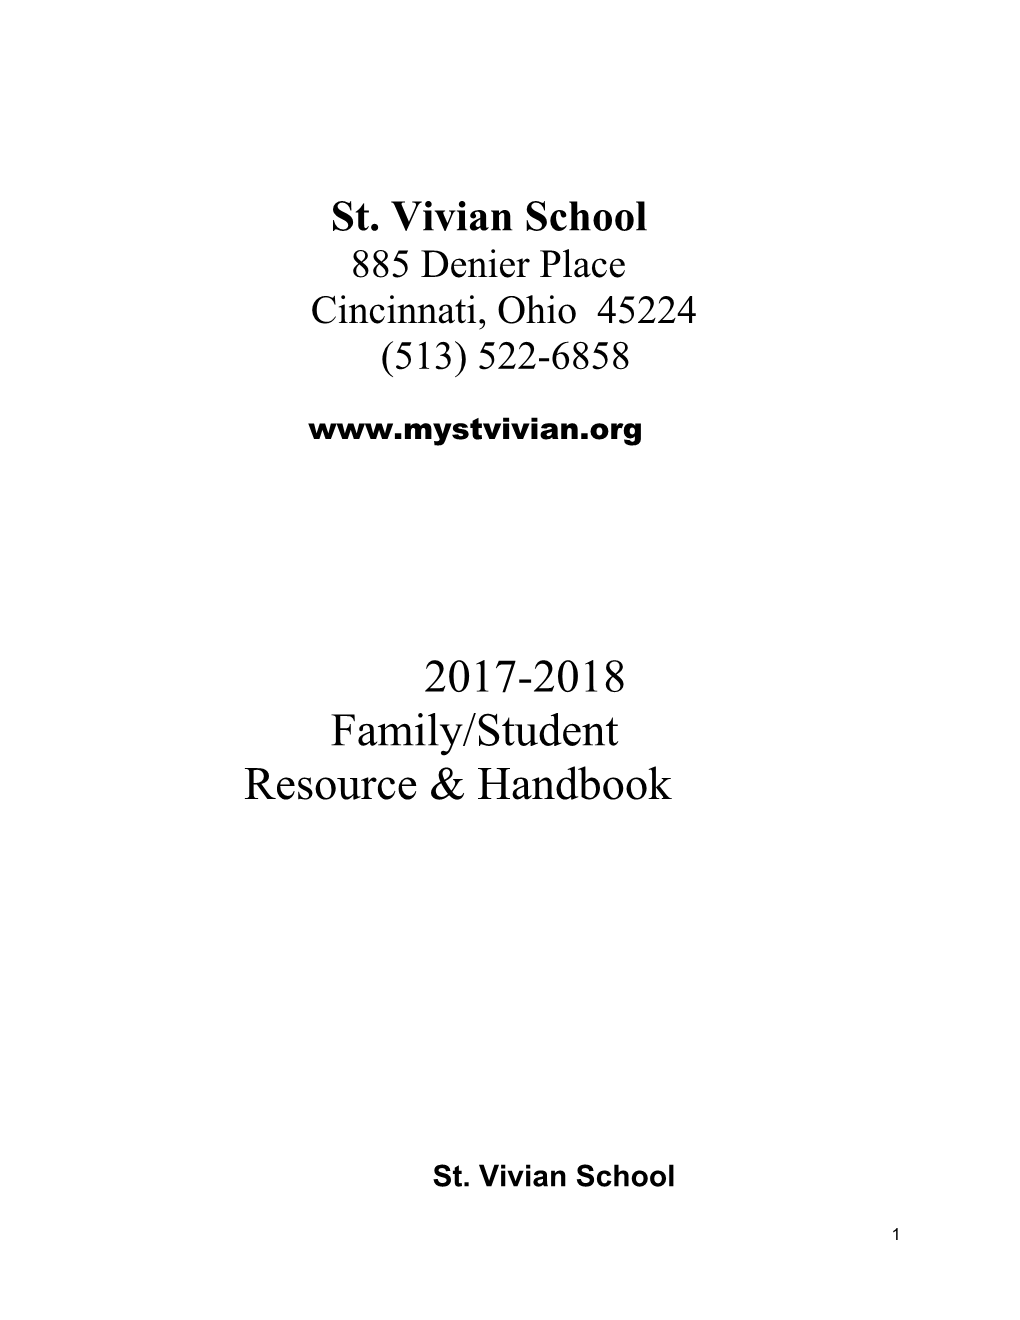 Mission Statement Of Saint Vivian Catholic School